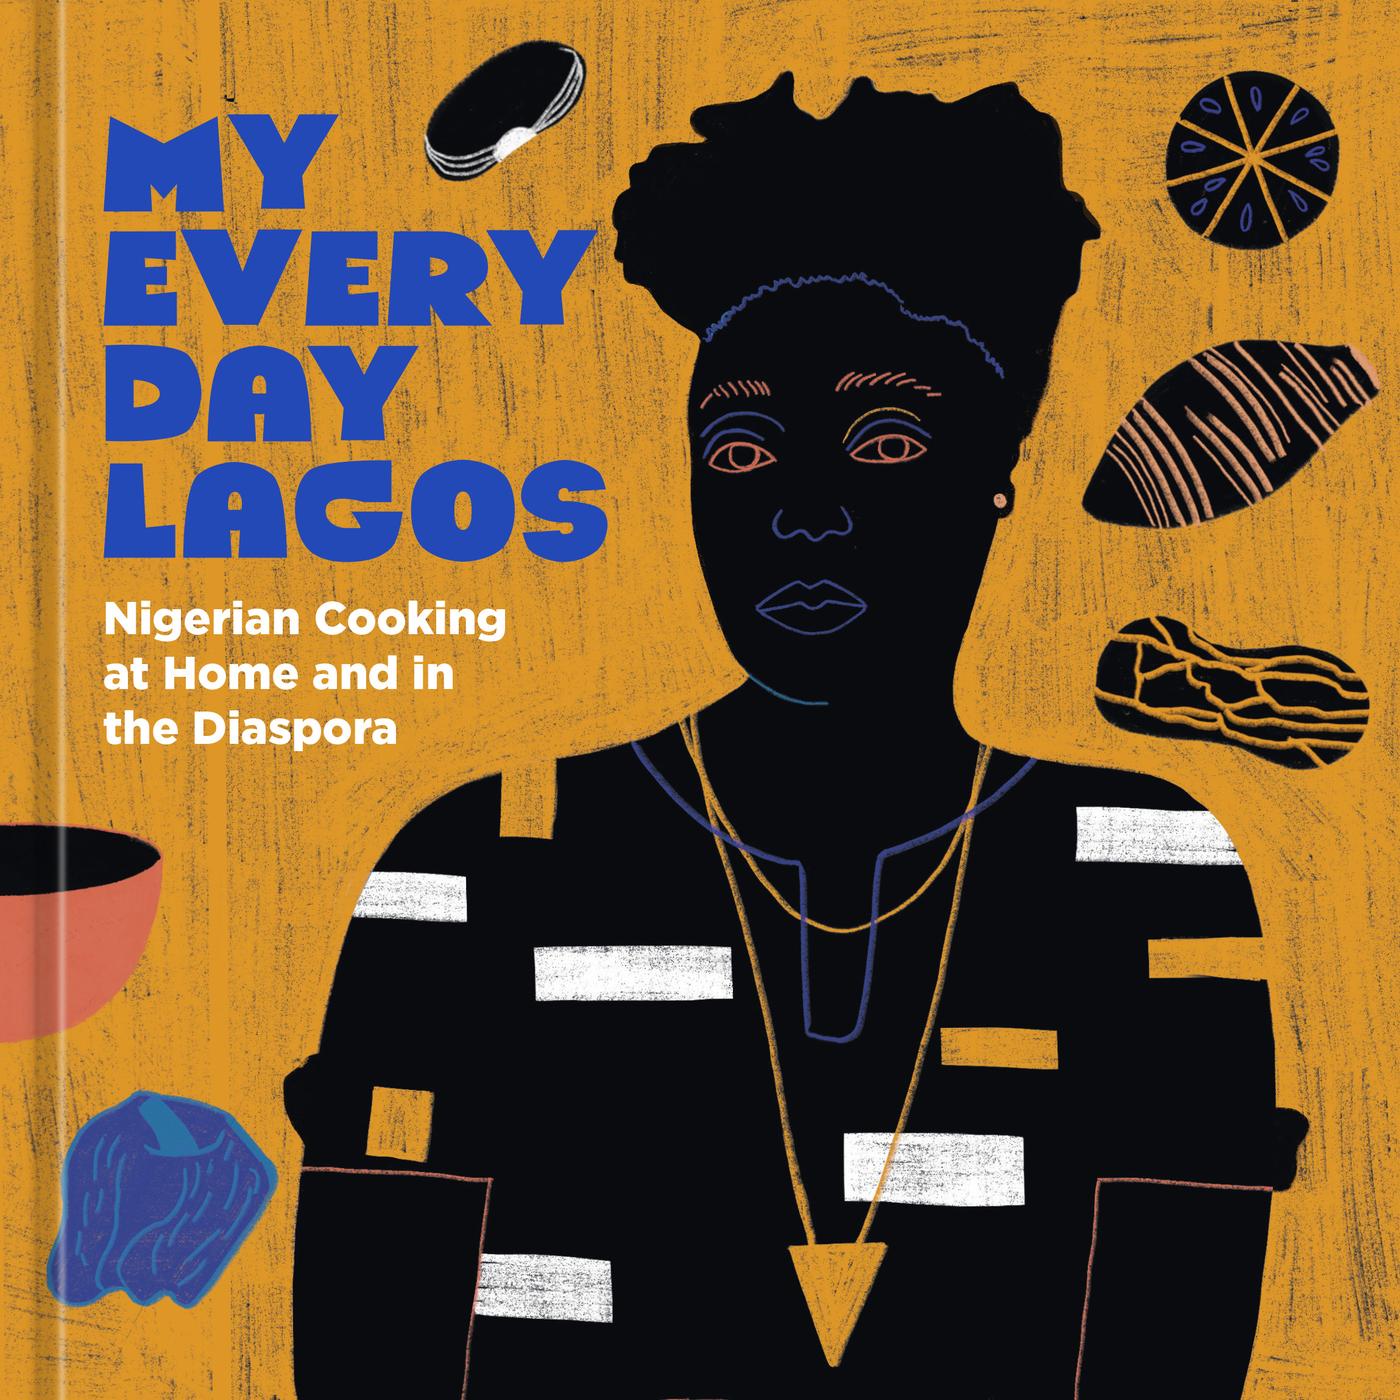 Yewande Komolafe Presents Her Everyday Lagos with New Cookbook